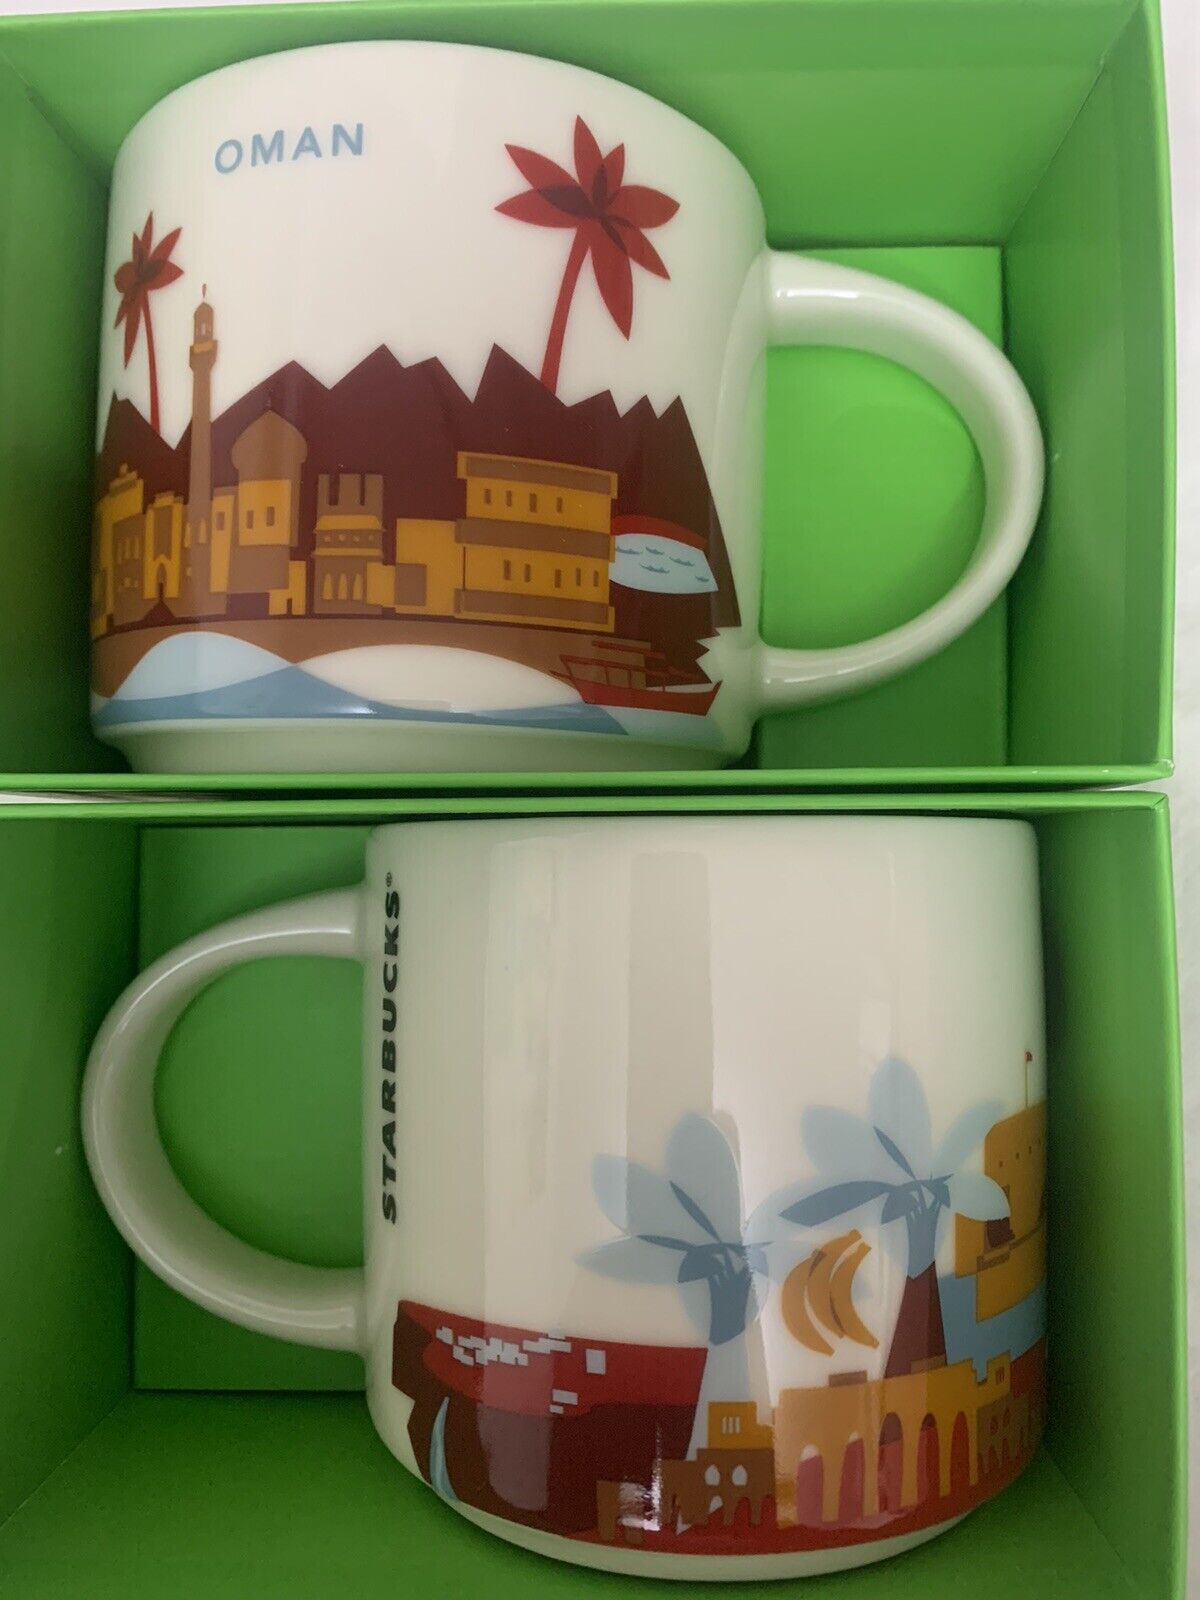 Starbucks YAH mug Oman 14 fl oz/ 414ml new with SKU sticker (1 mug)